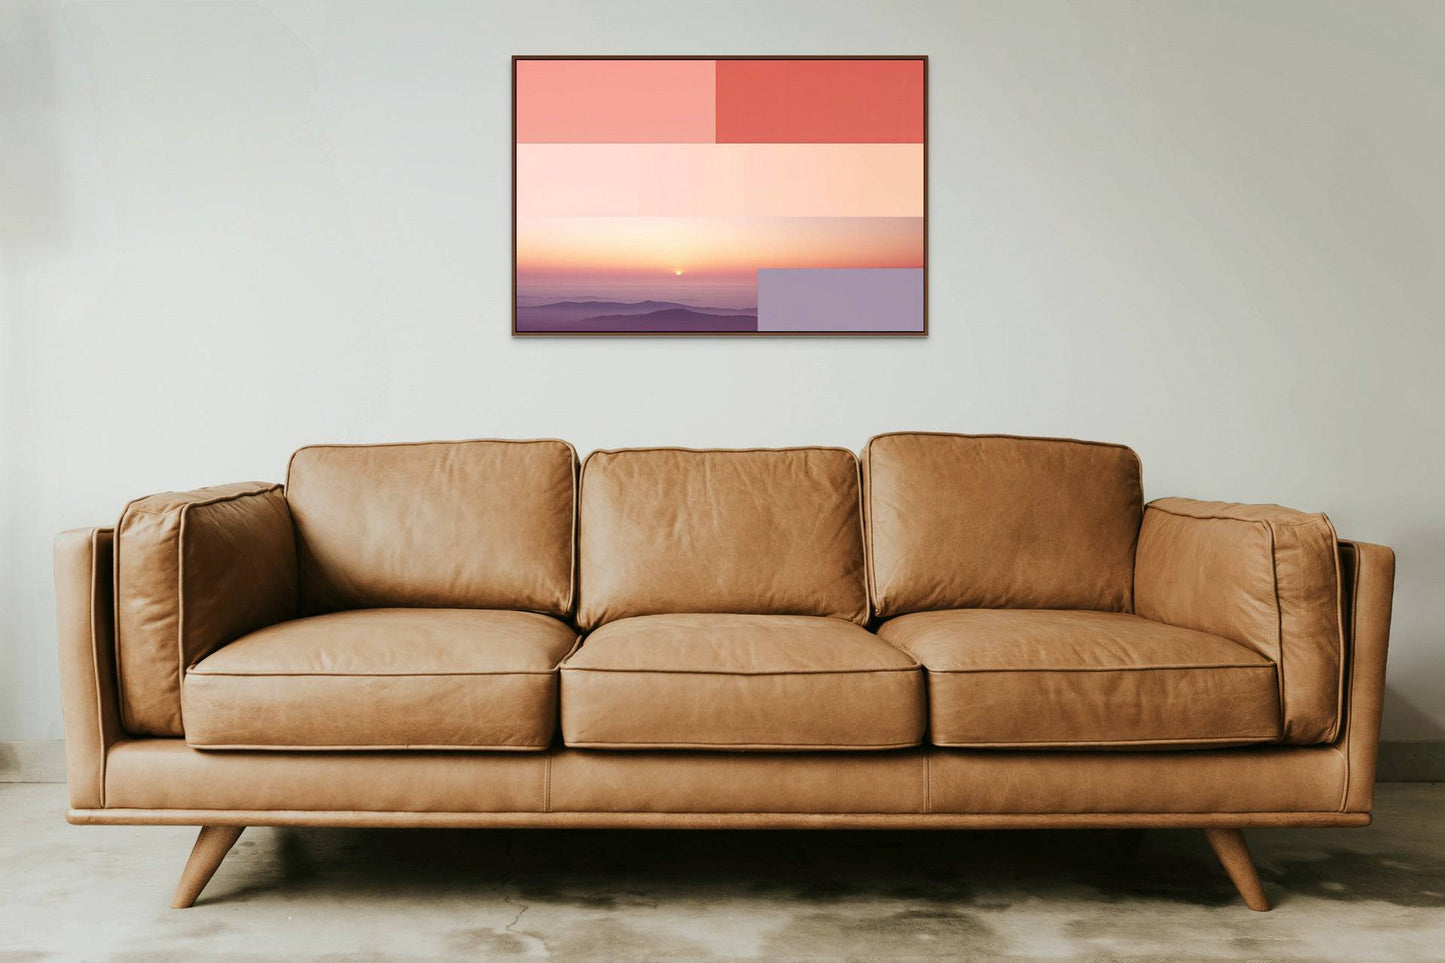 Sunset Odyssey #614782 - Pixel Gallery